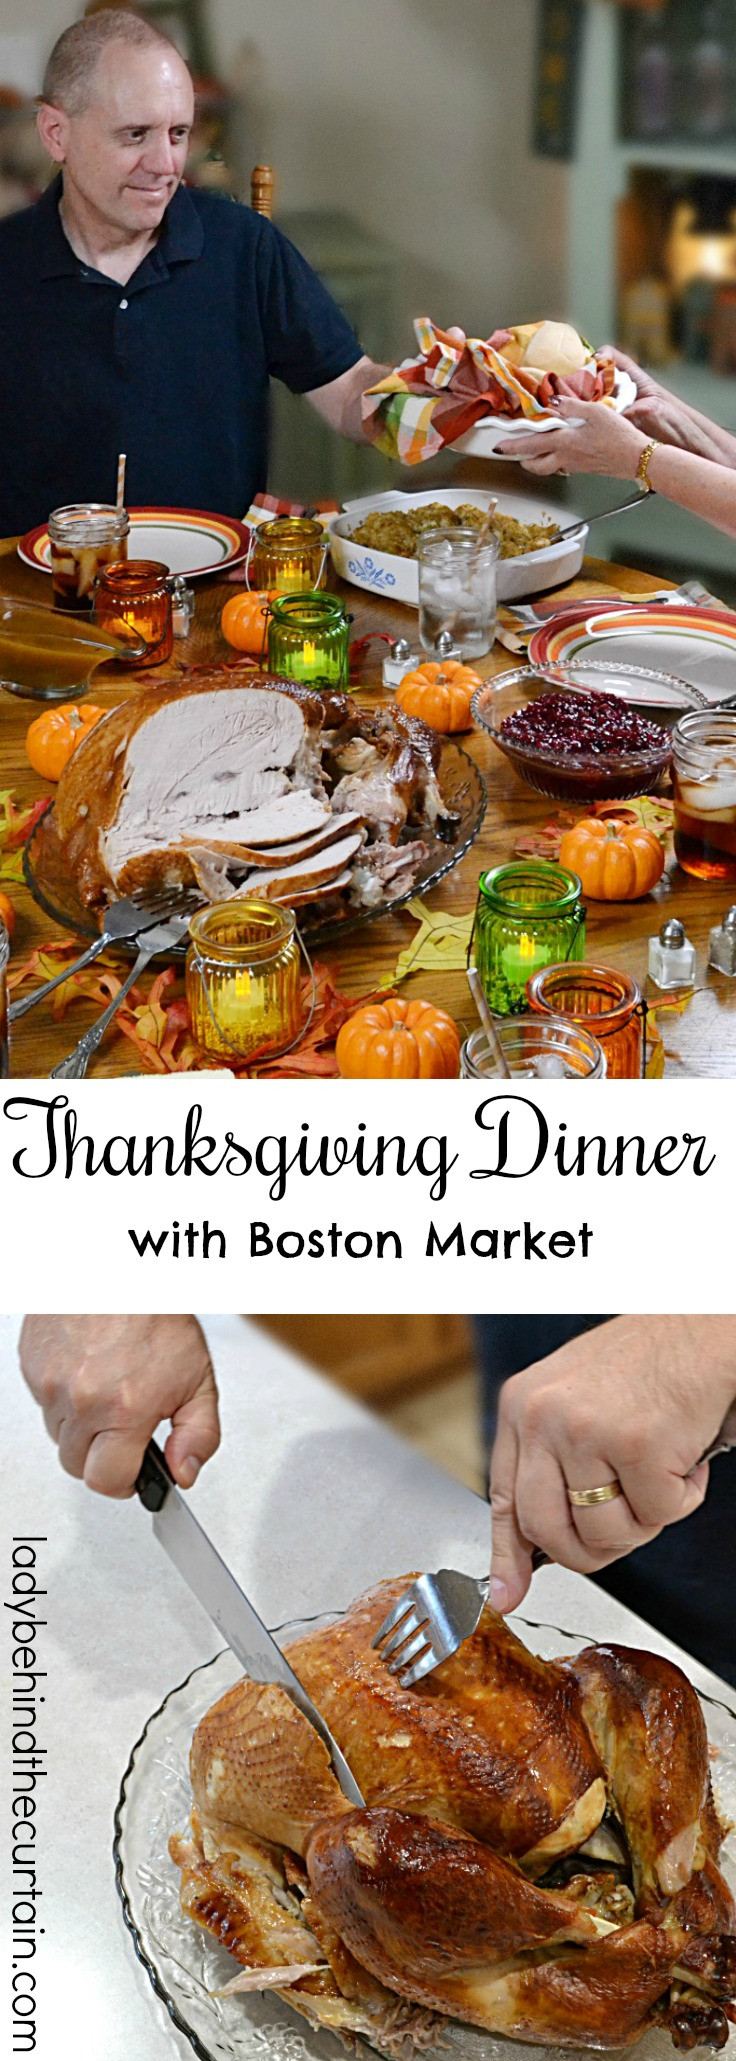 Boston Market Turkey Dinner Thanksgiving
 Thanksgiving Dinner with Boston Market